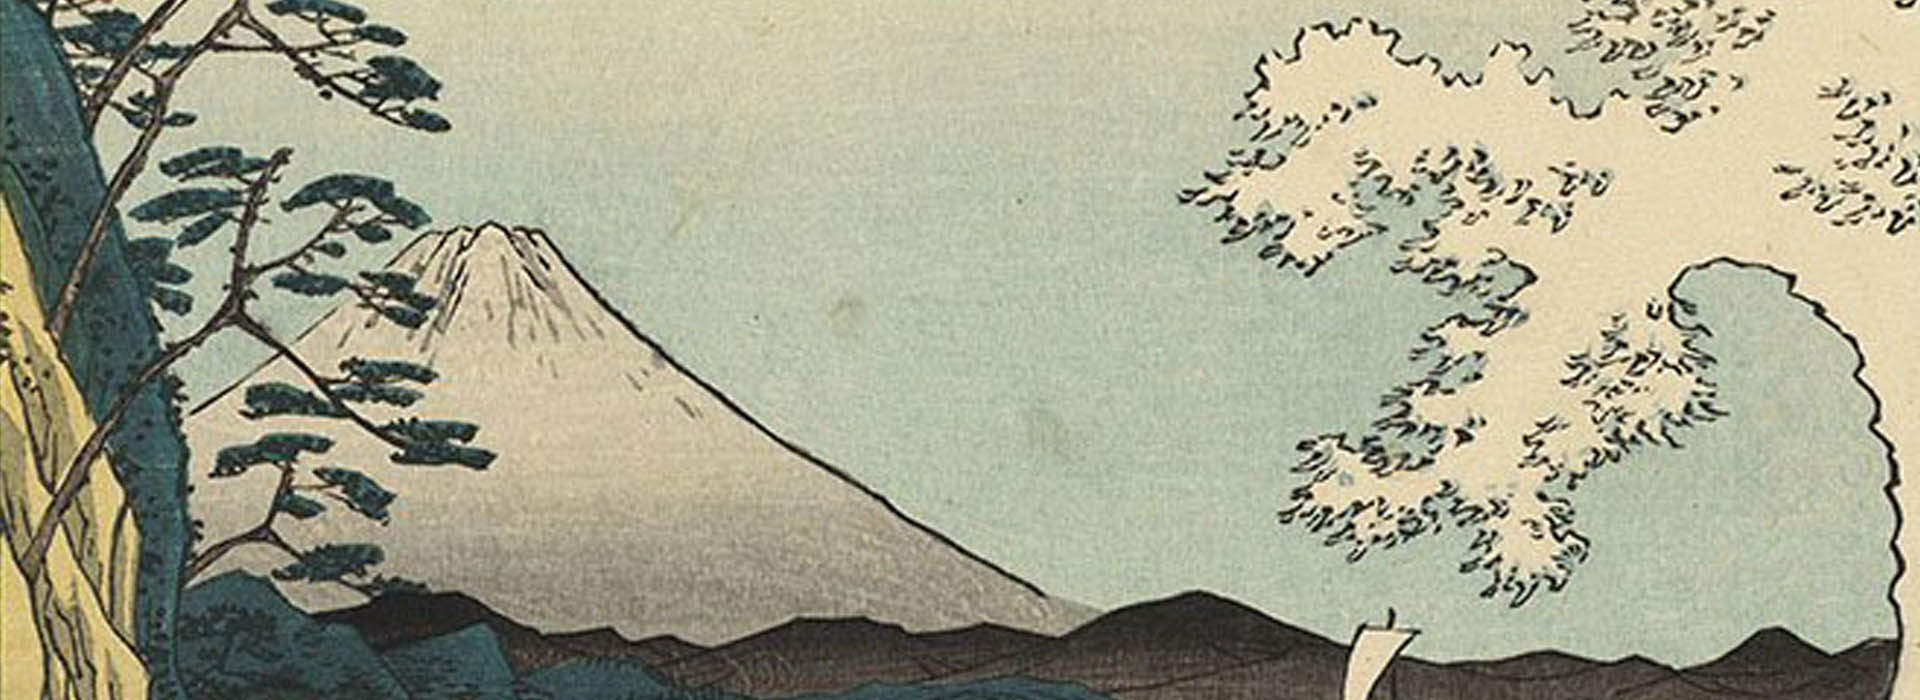 Hiroshige. Visions from Japan